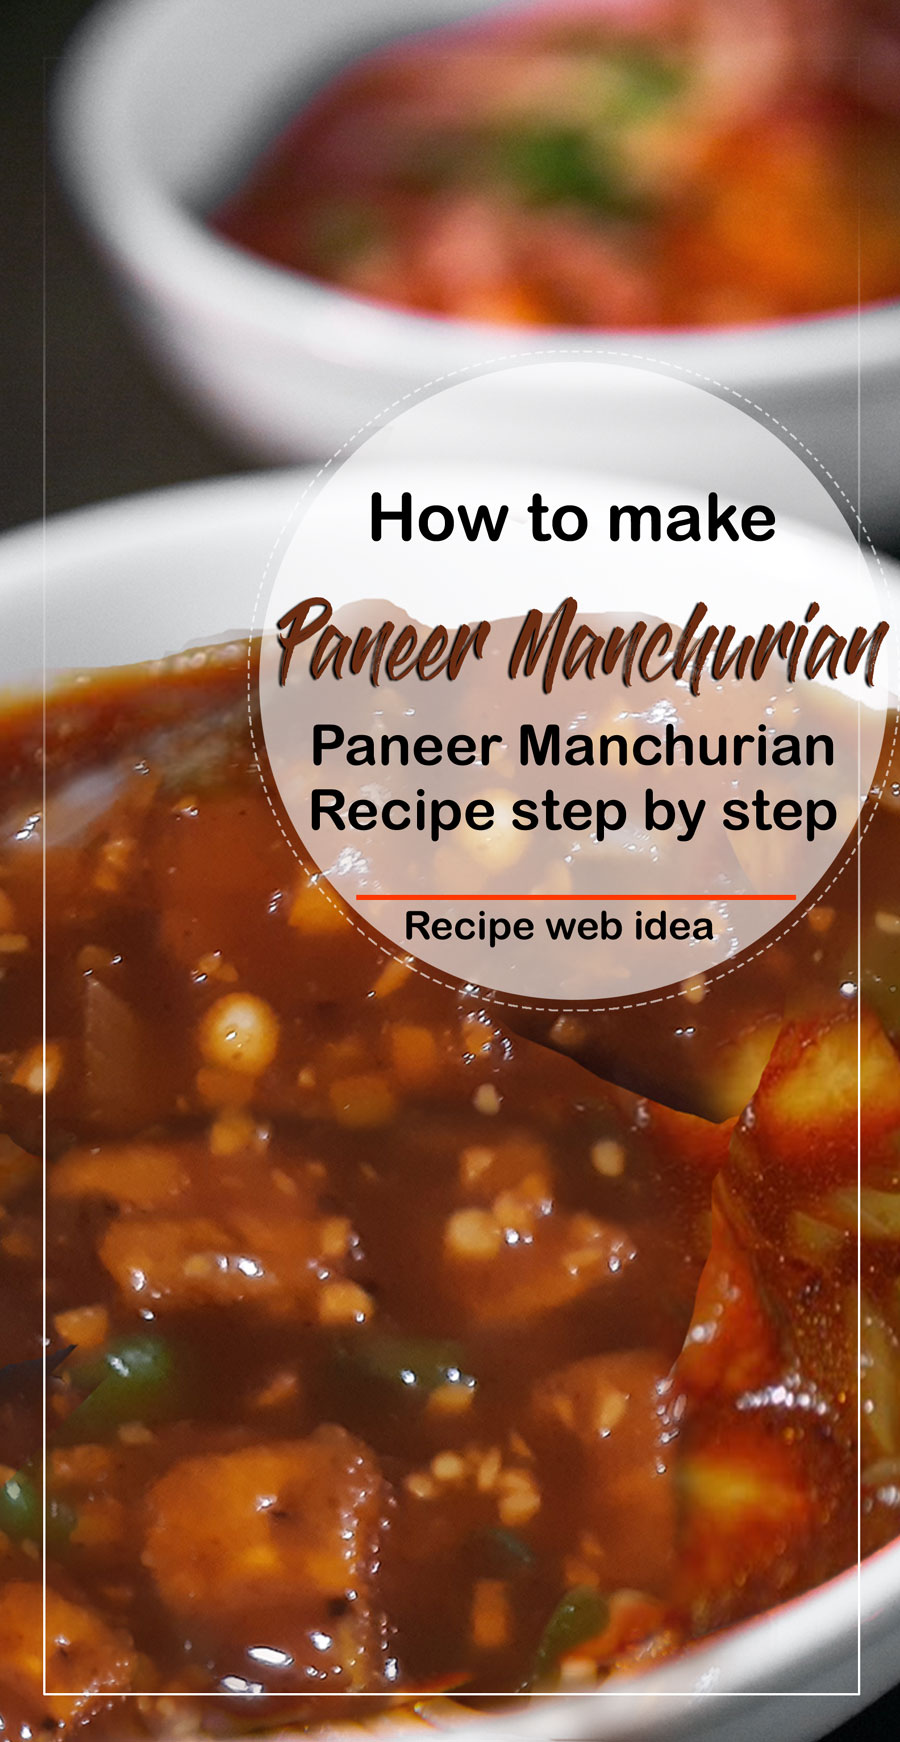 Paneer Manchurian Recipe